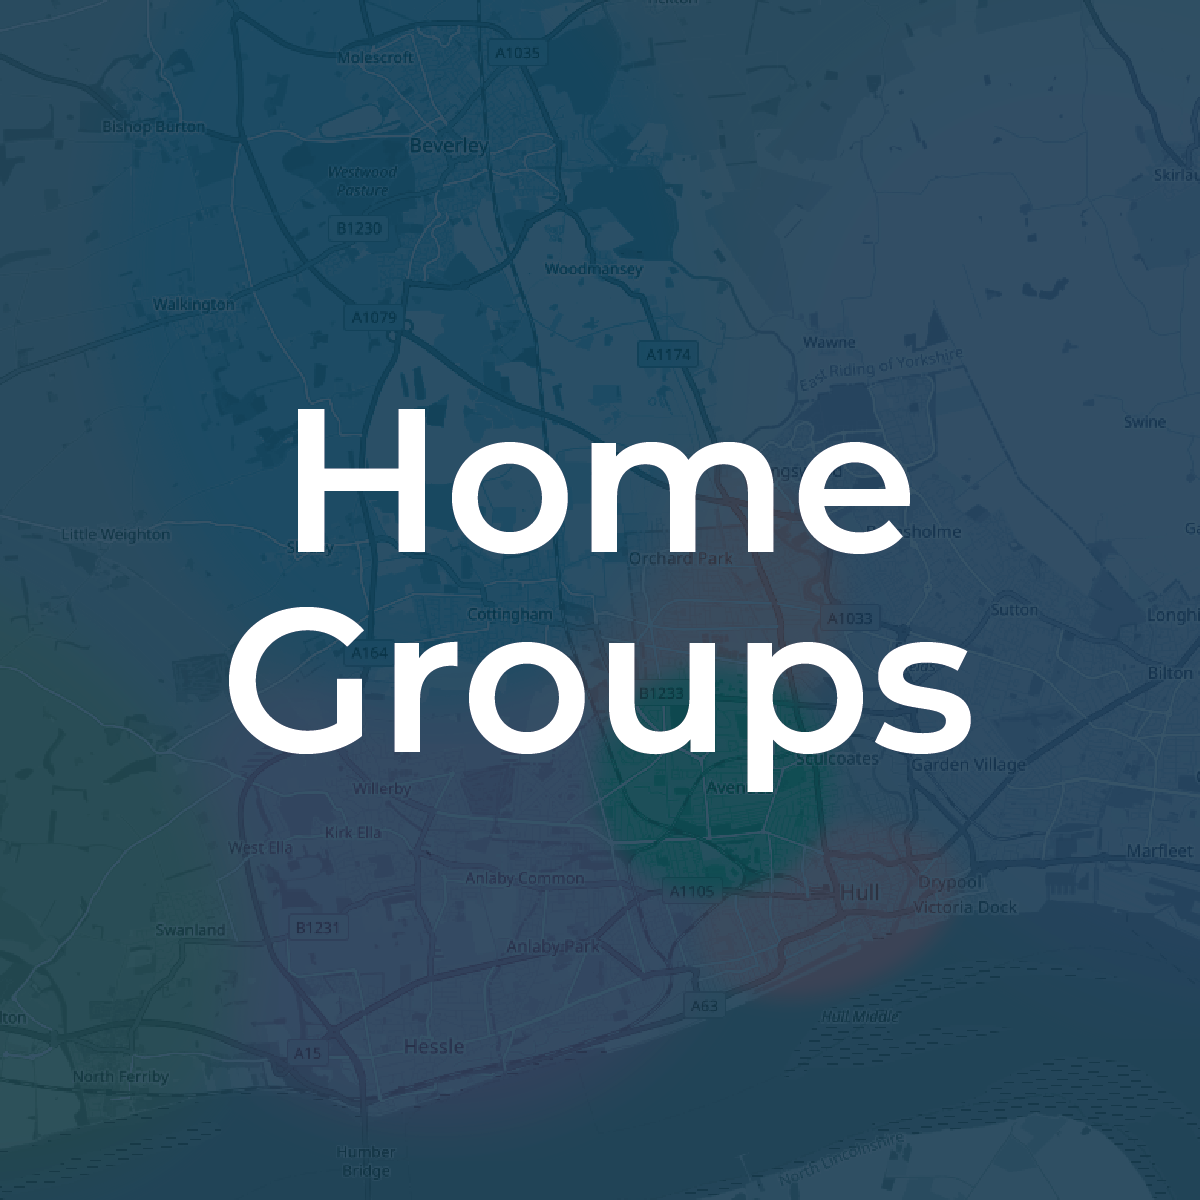 Home Group Update // John Clarke